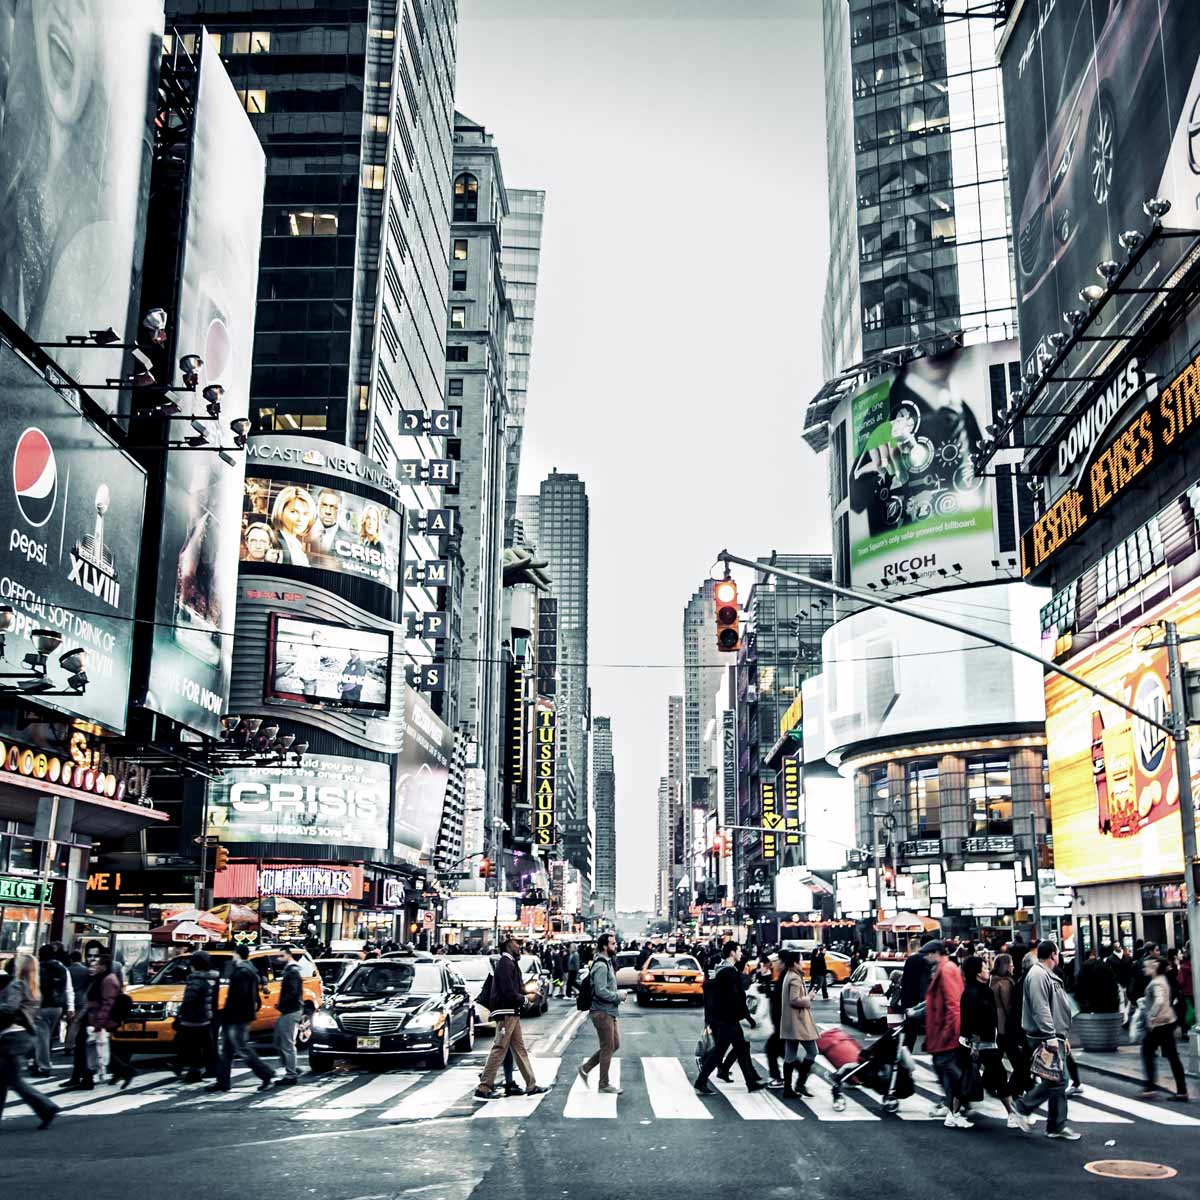 Visual Content Dominates Times Square